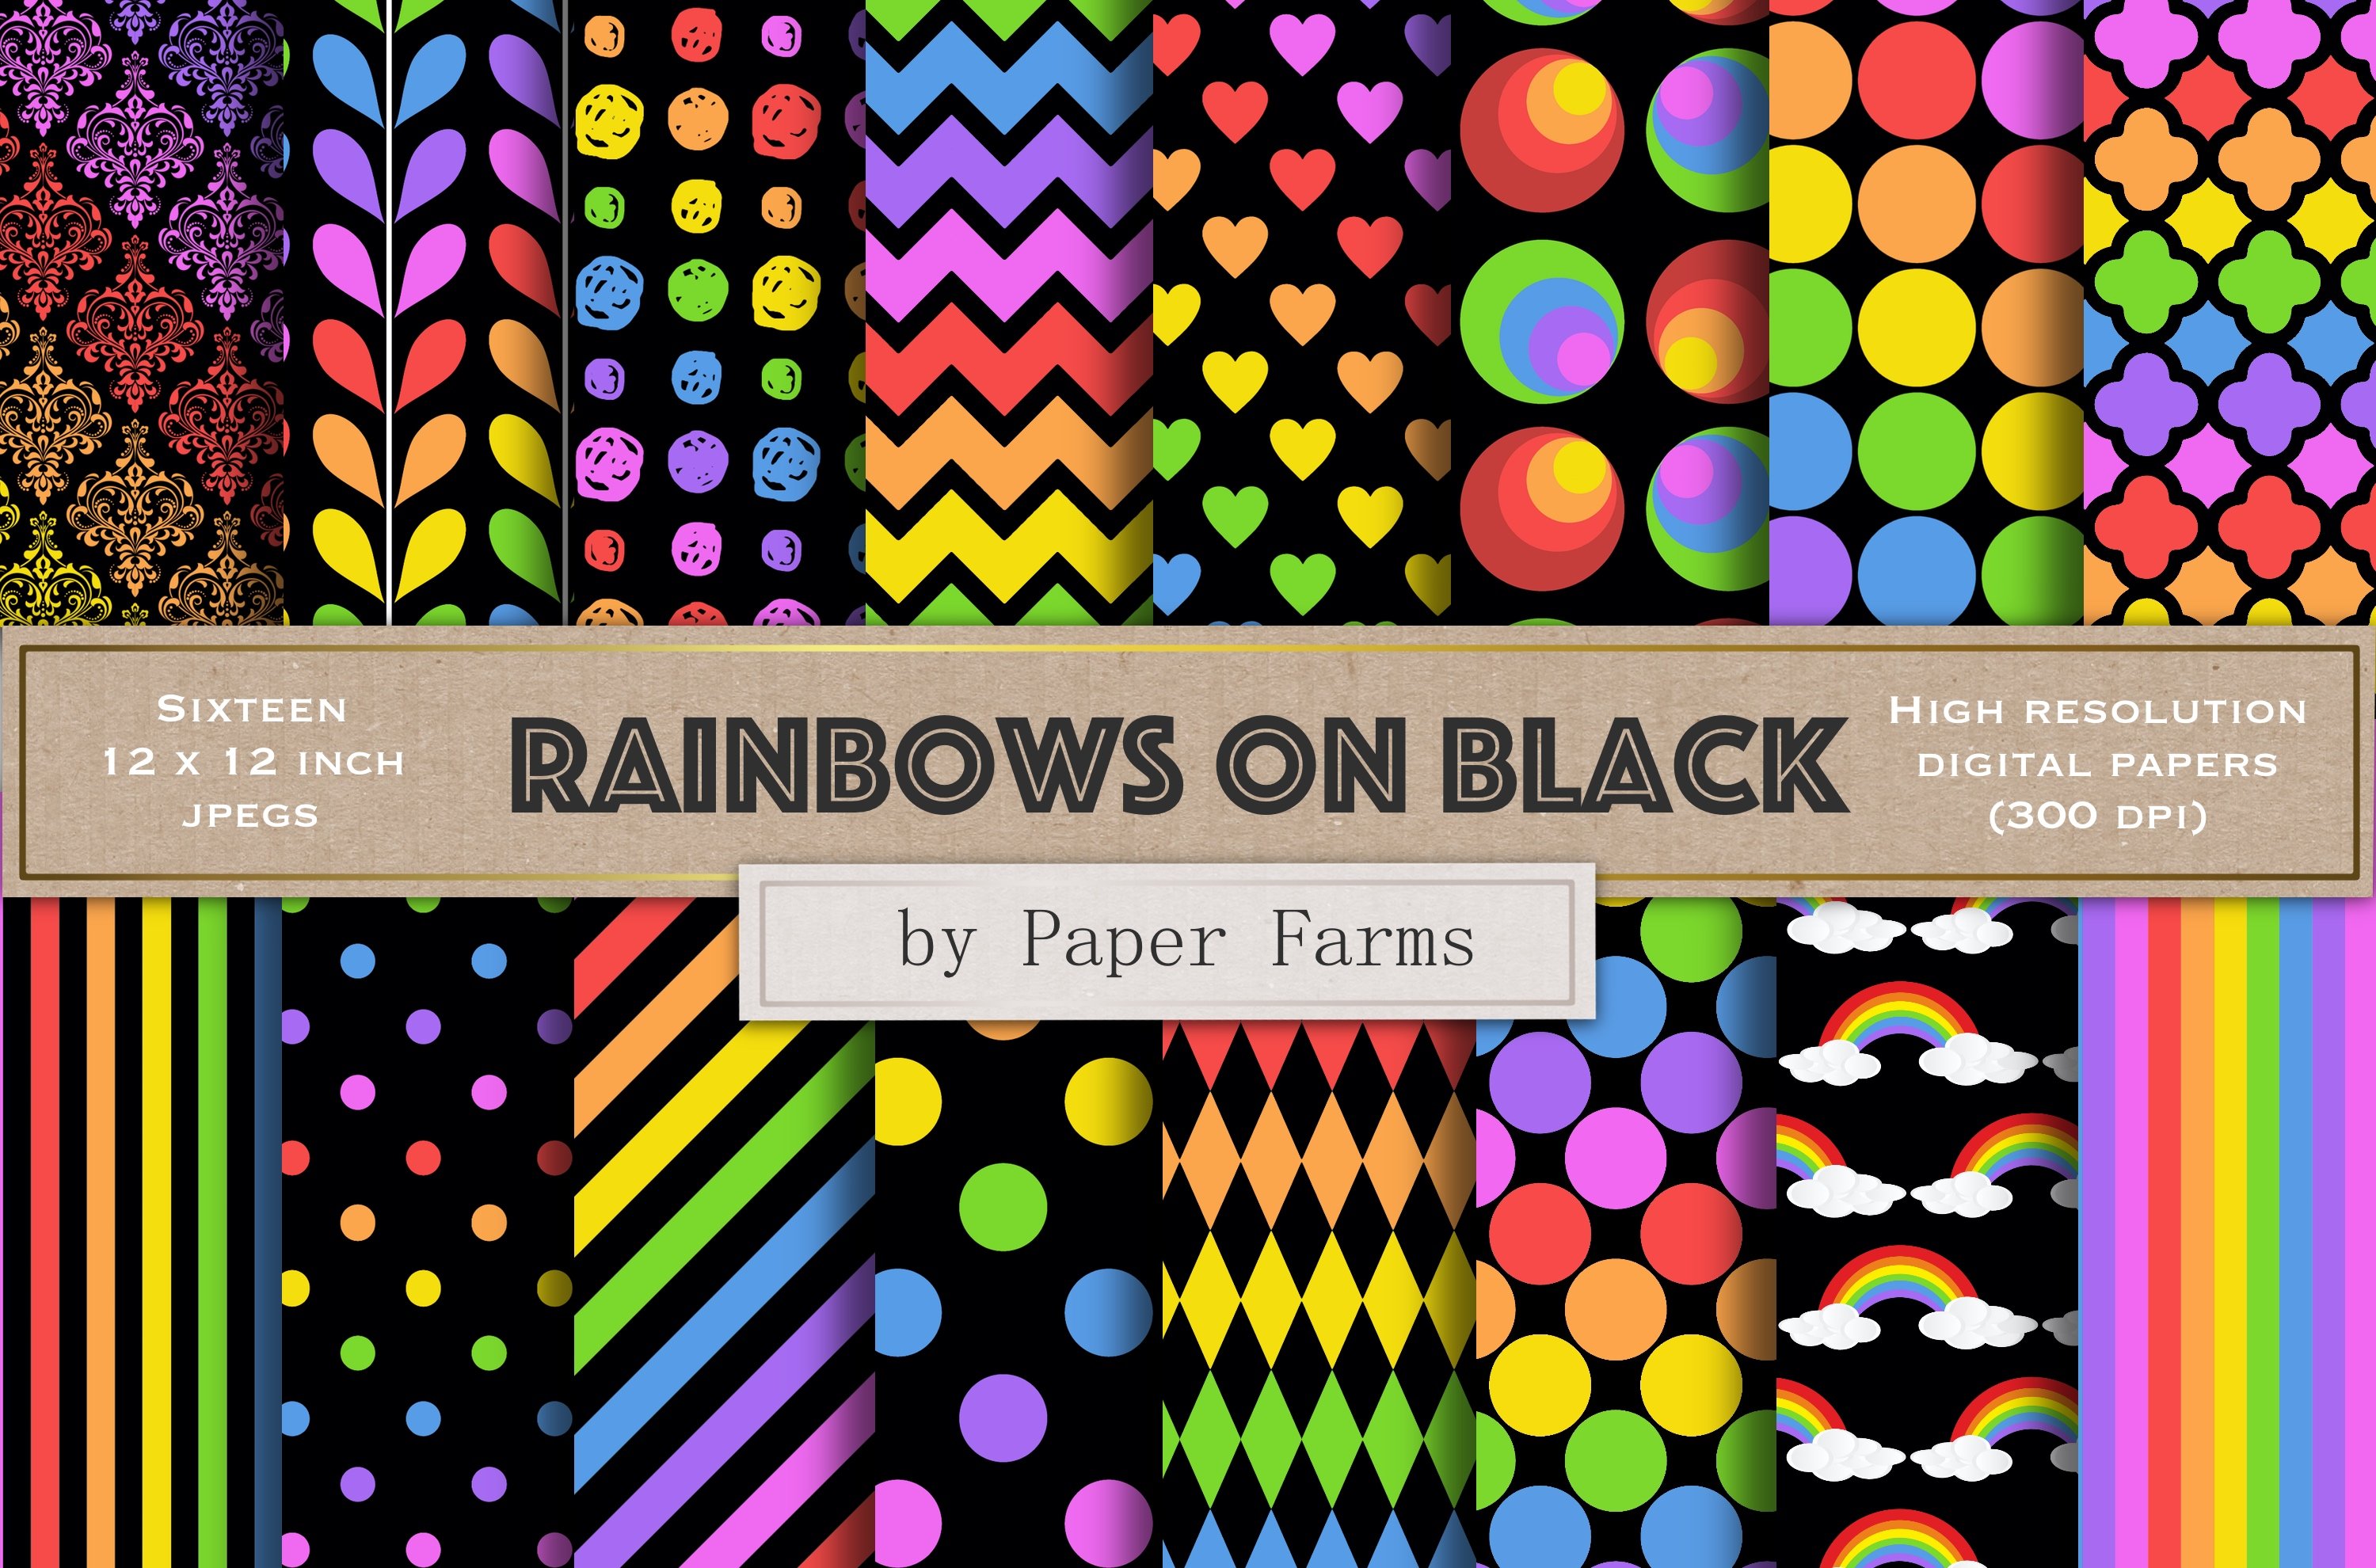 Rainbow digital paper cover image.